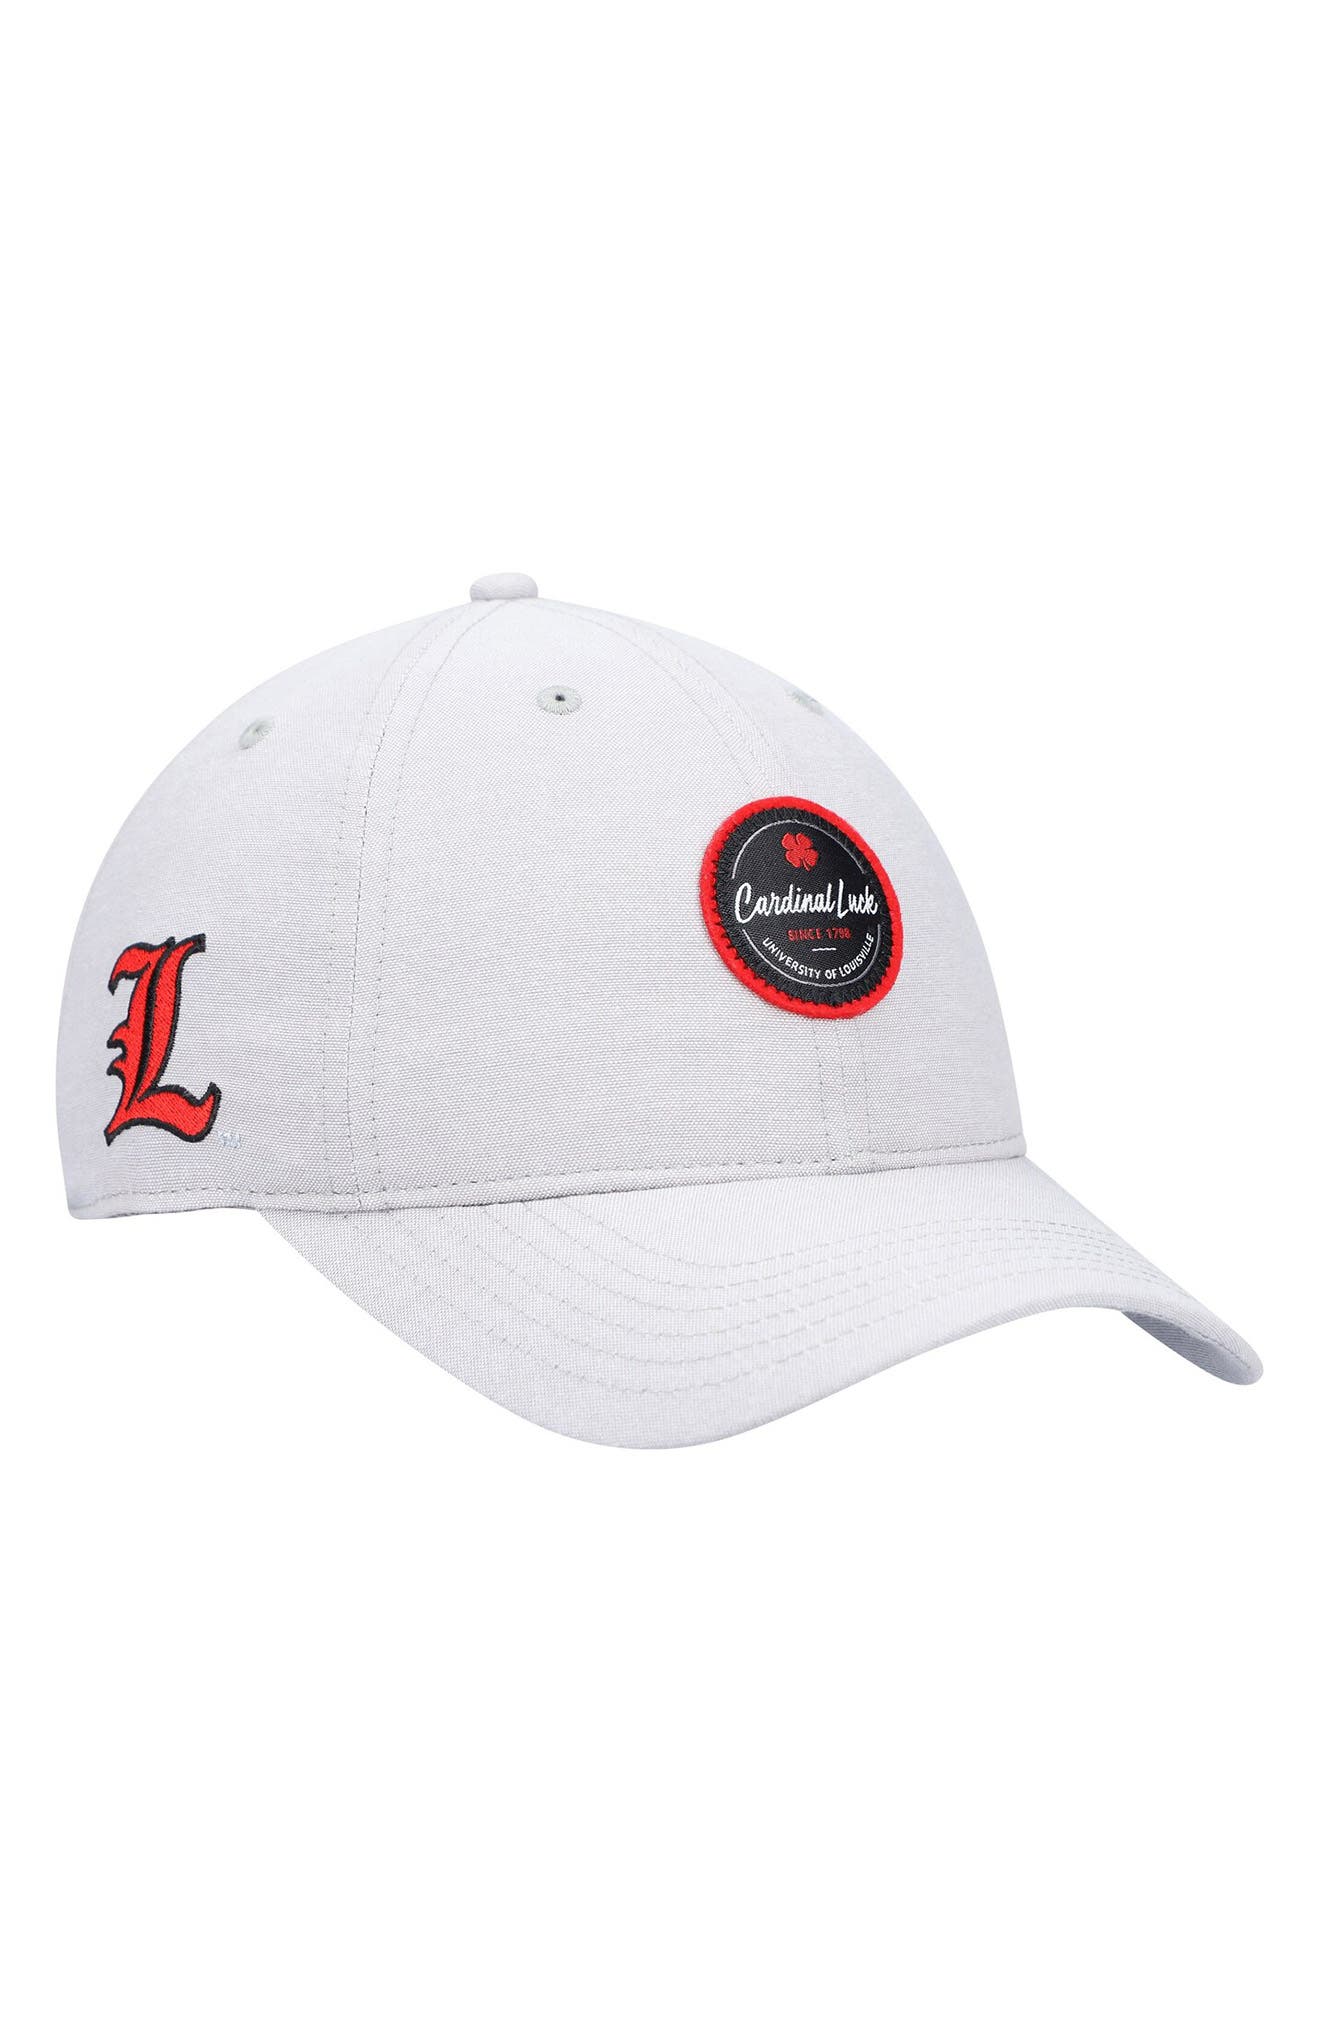 HXXUAN Baseball Hats Lucky Clover in Horse Snapback Sandwich Cap Adjustable Peaked Trucker Cap